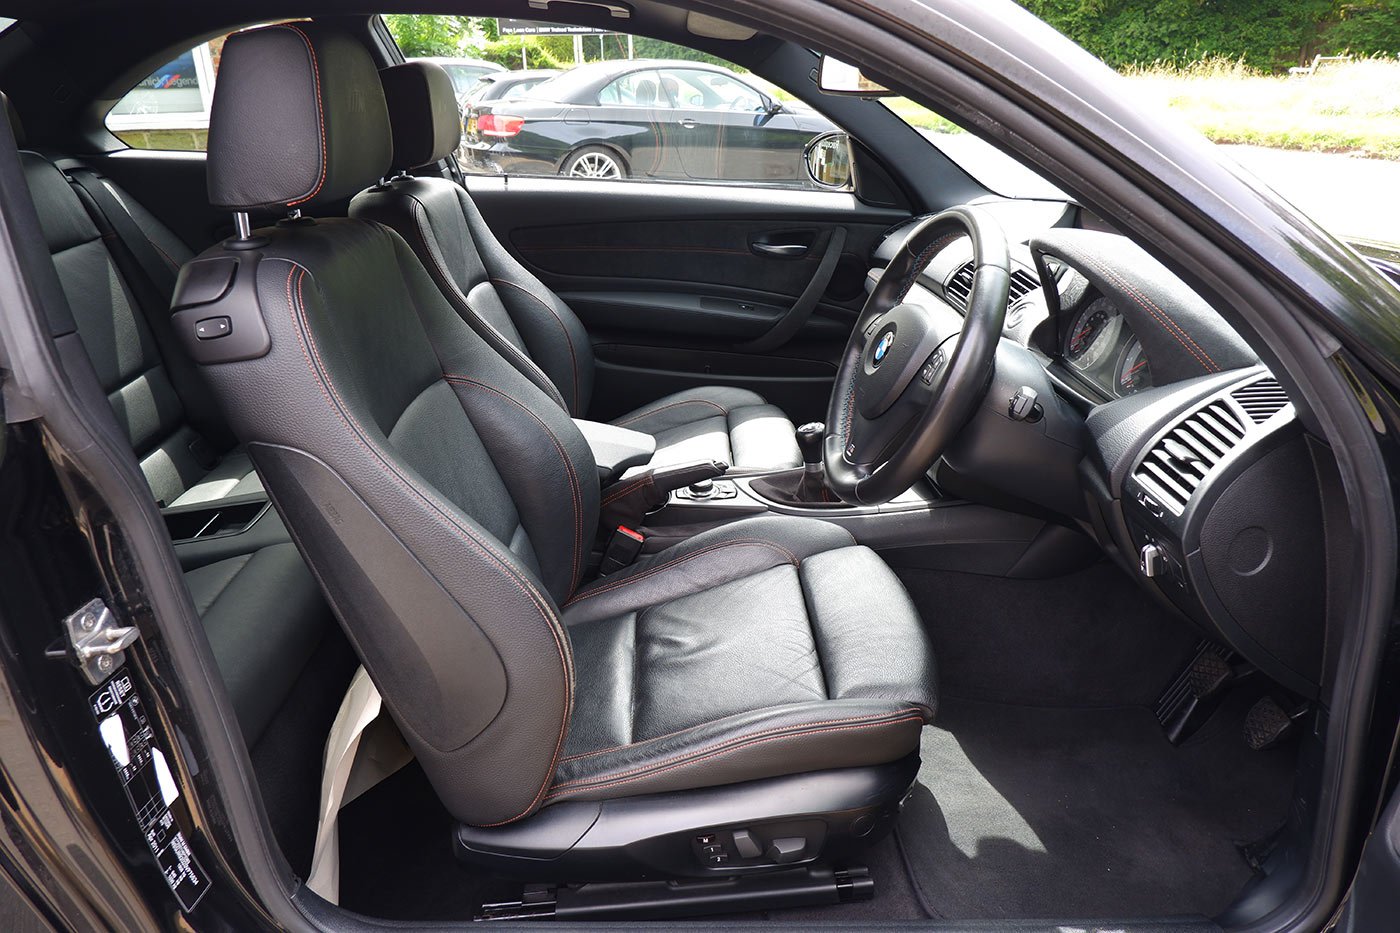 BMW 1M interior - Seats